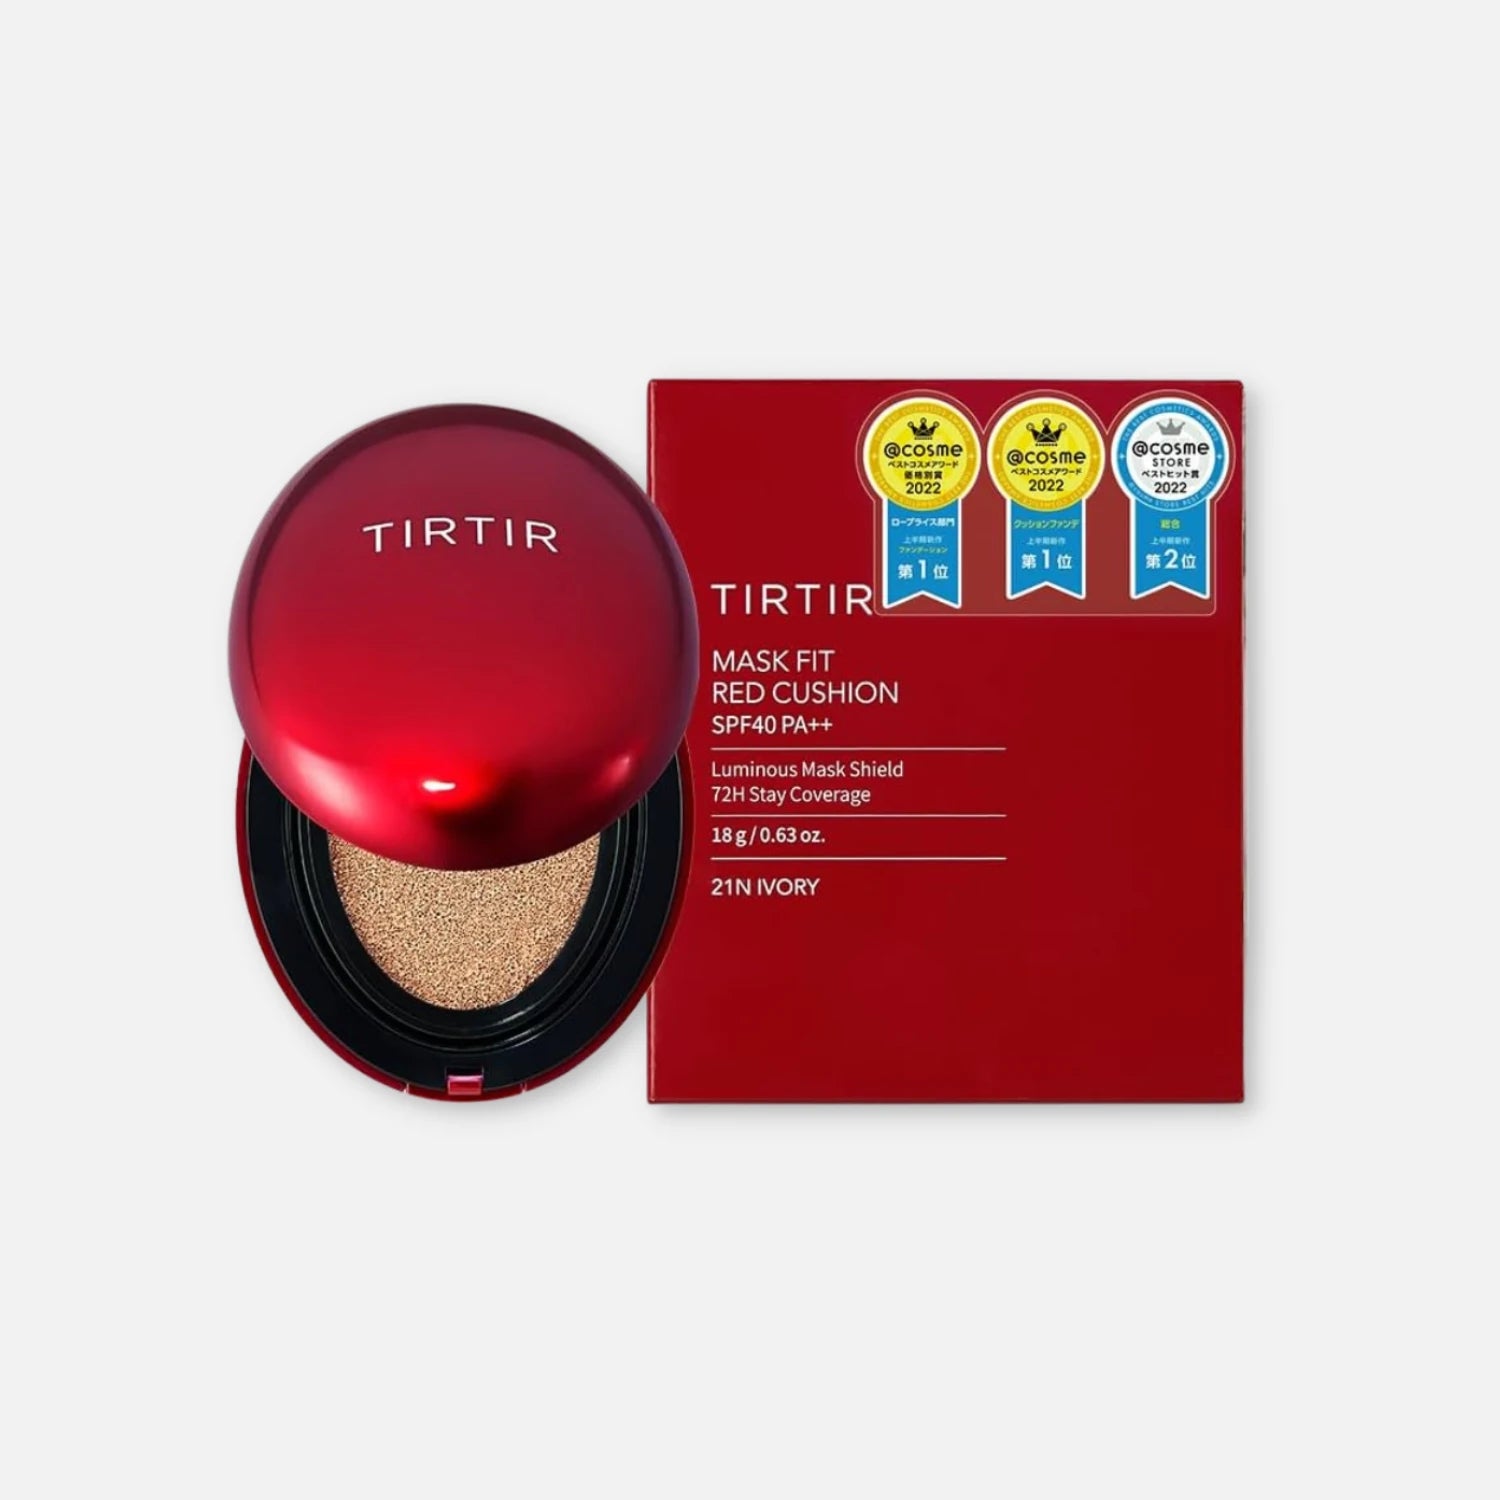 TIRTIR Mask Fit Red Cushion SPF 40 PA++ 18g (Various Shades) - Buy